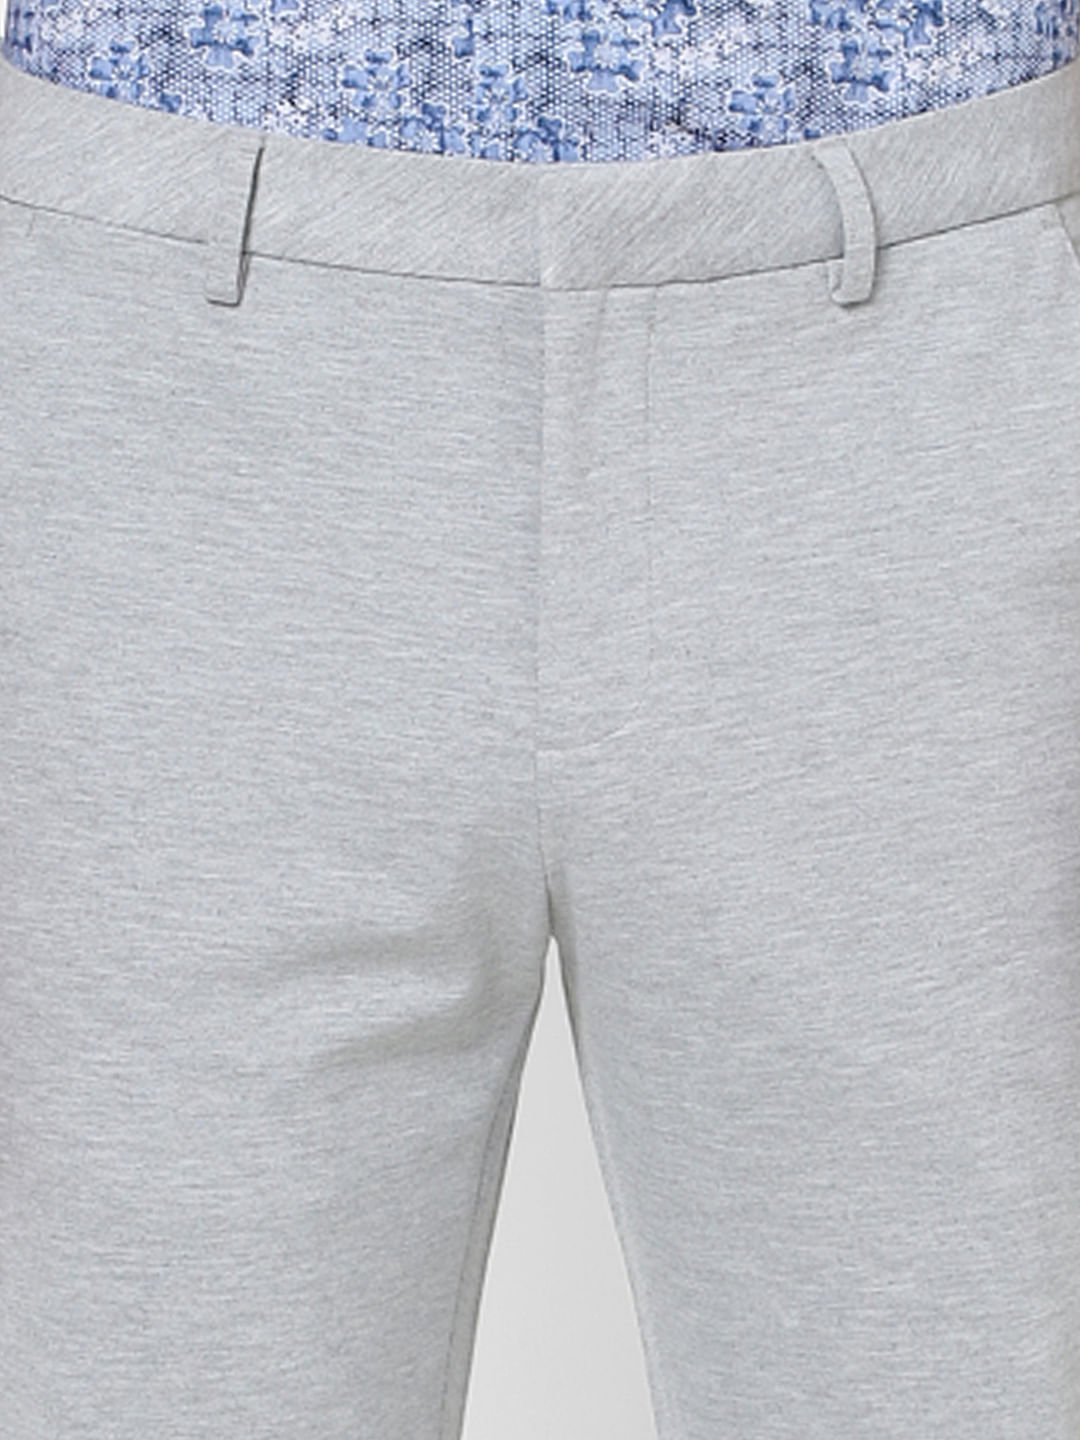 Urban Ranger by Pantaloons Light Grey Cotton Slim Fit Trousers